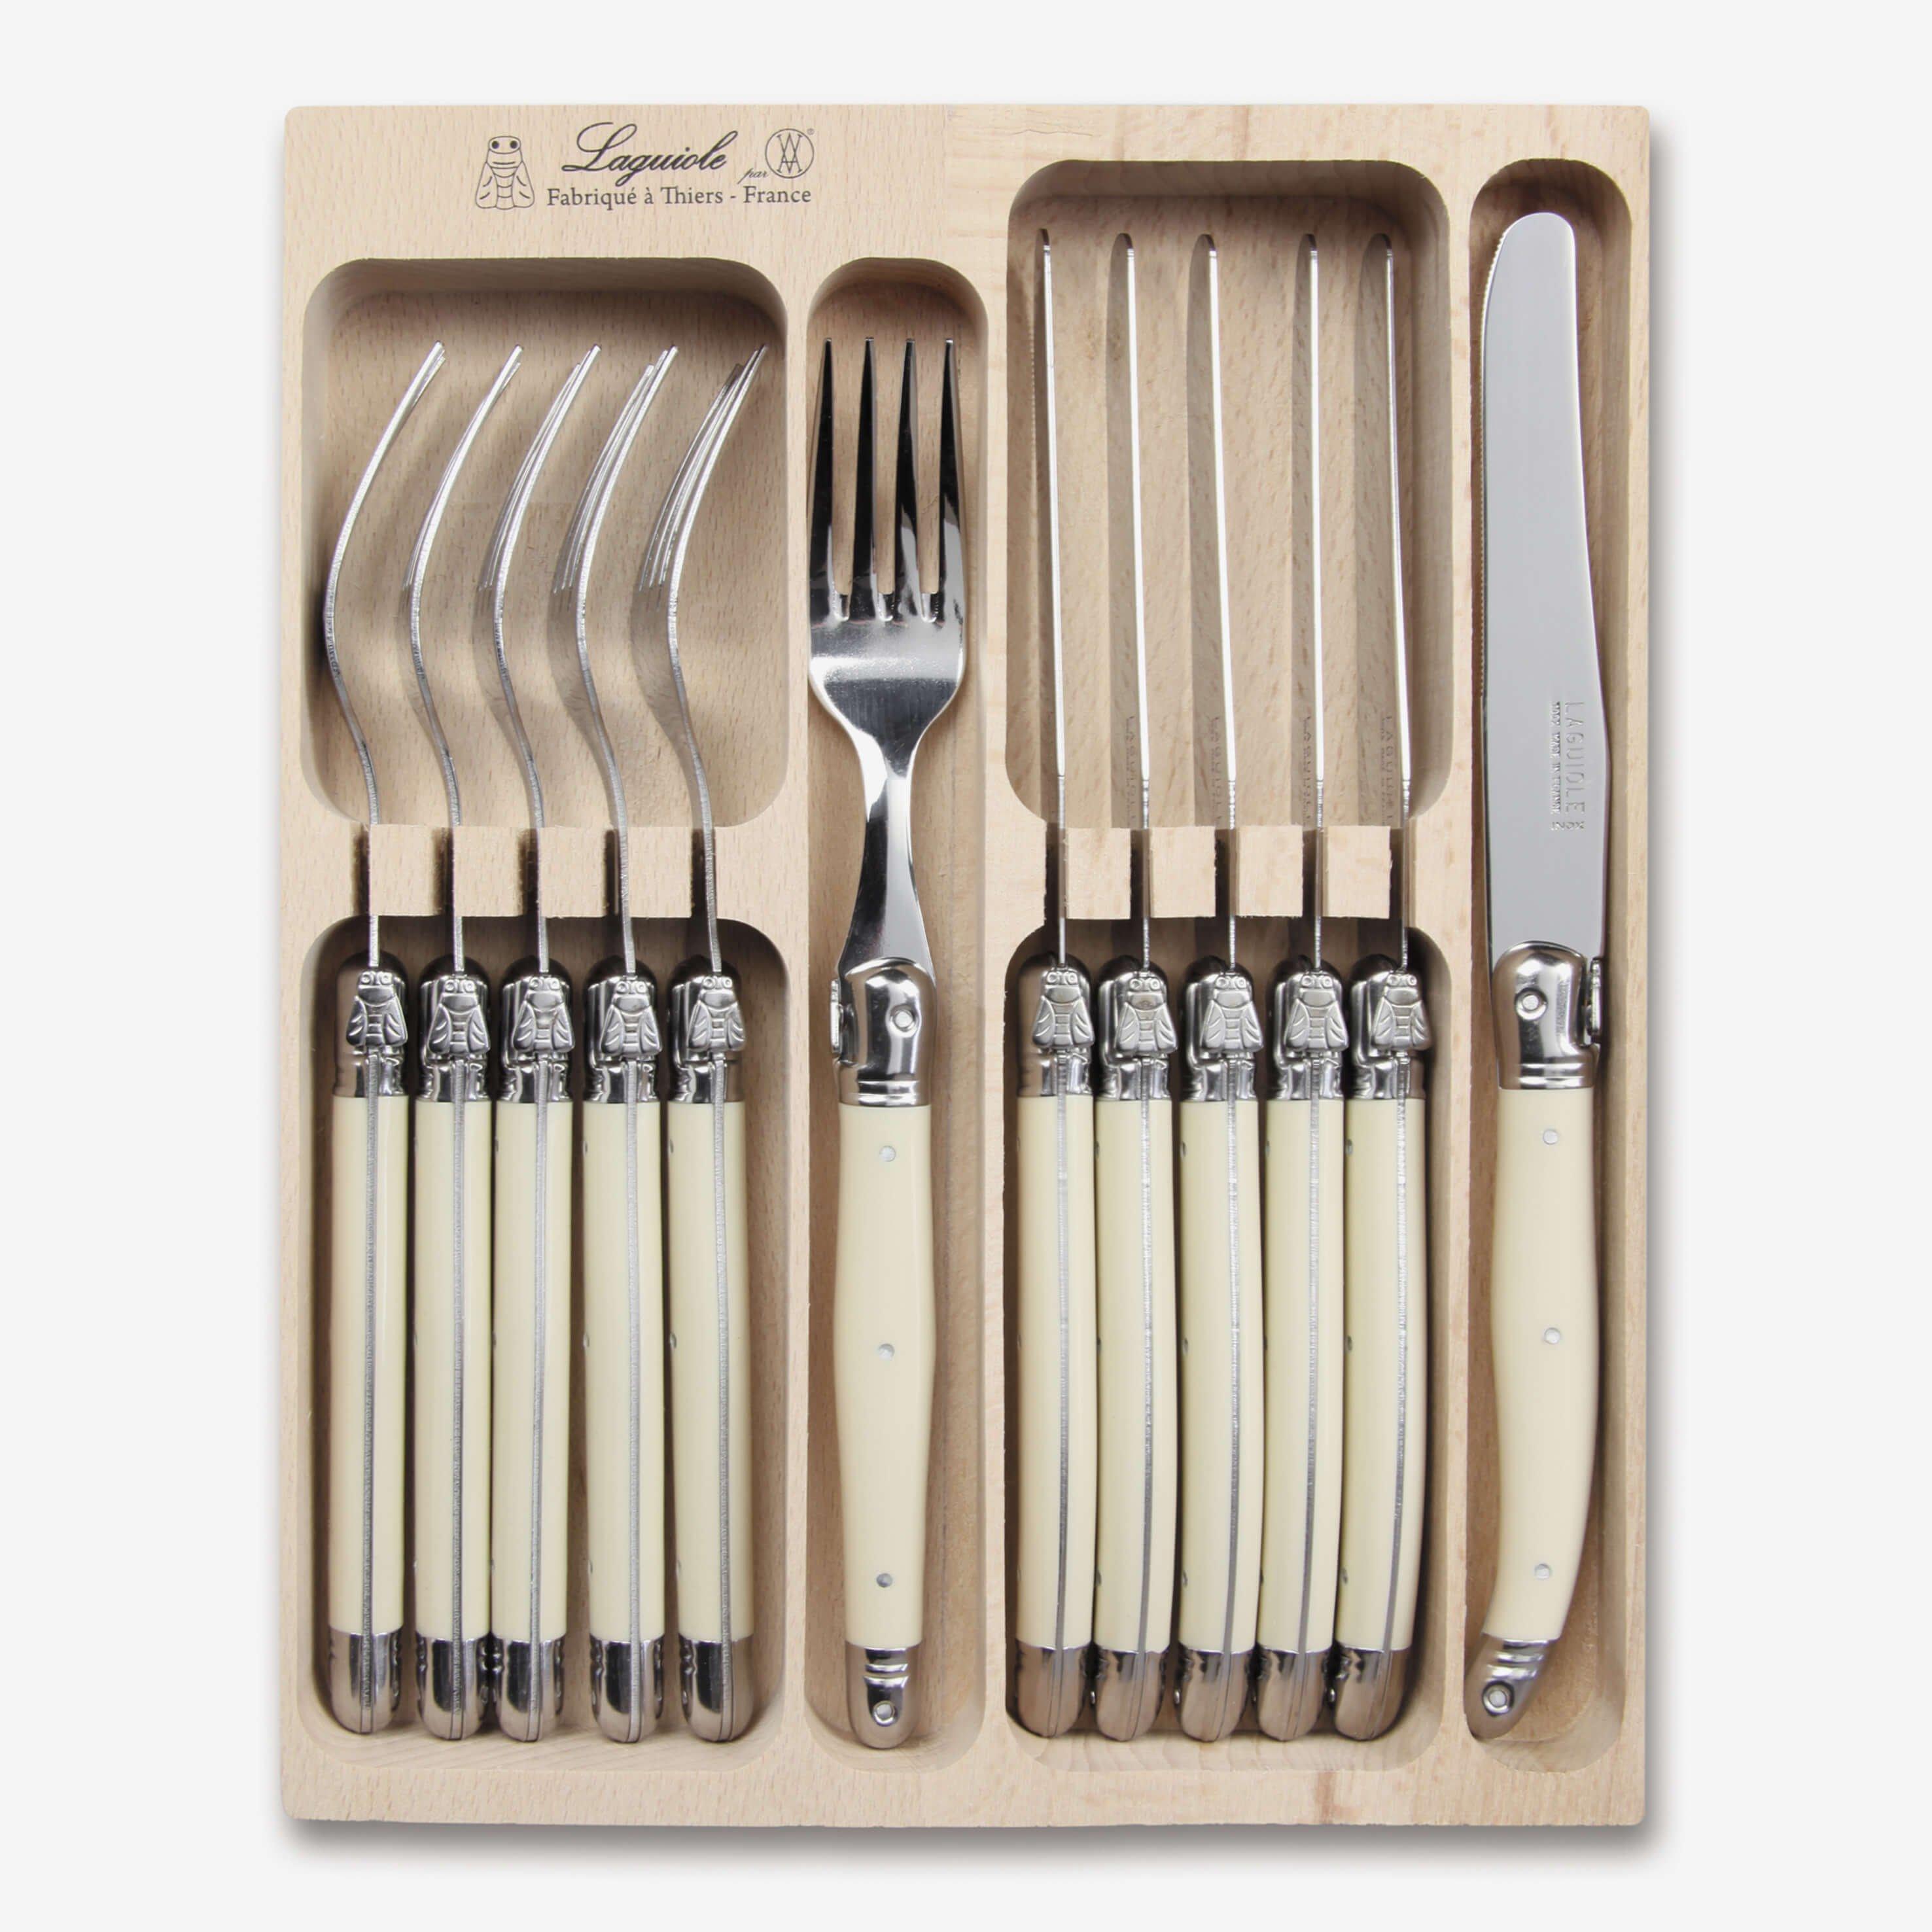 12 Piece Knife & Fork Set in Wooden Presentation Tray